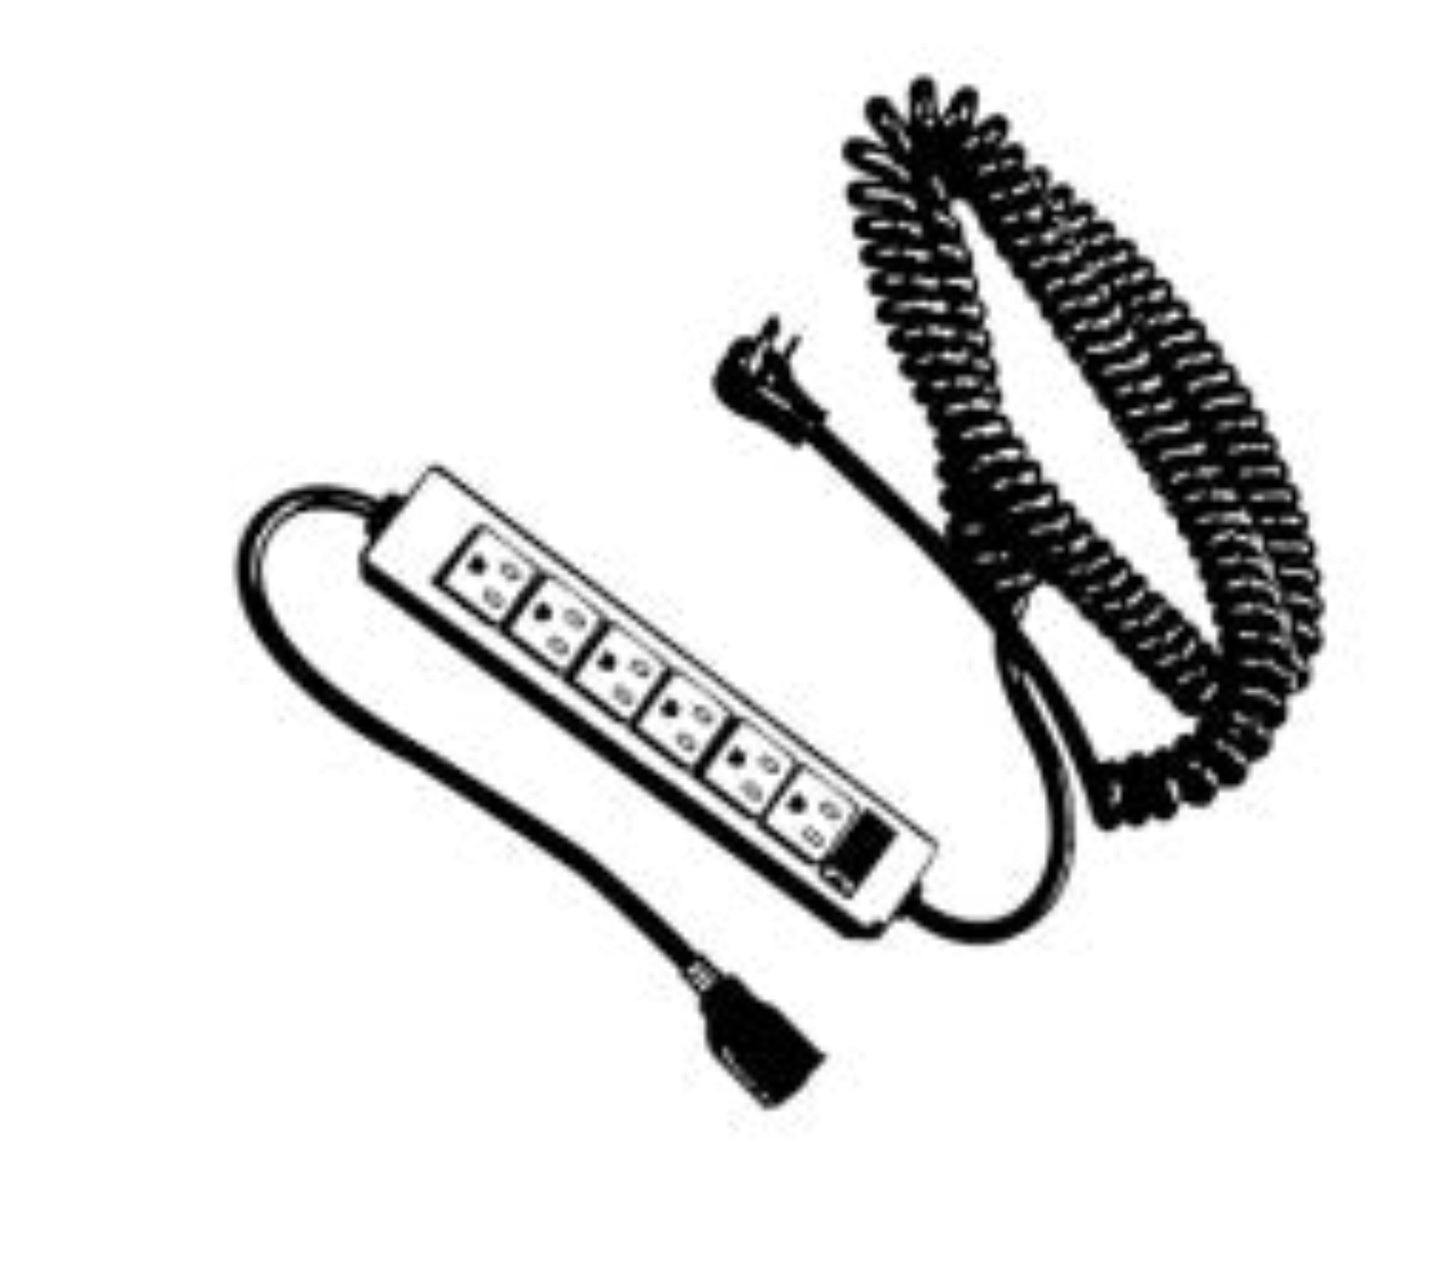 Power bar – 10' spiral wire / 1' straight daisy chain plug by Ergocentric